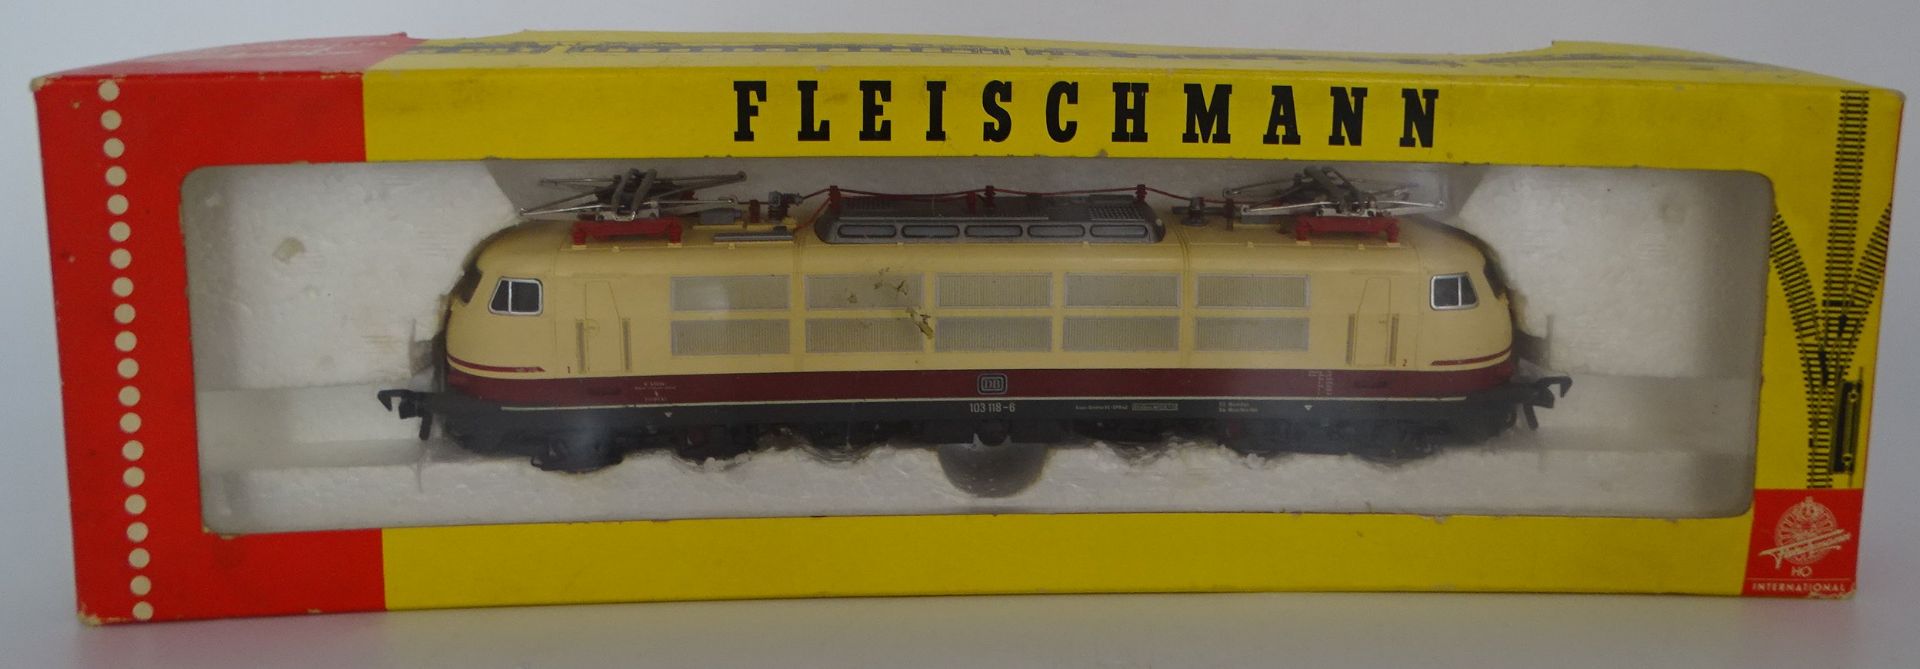 Fleischmann E-Lok in OVP, H0